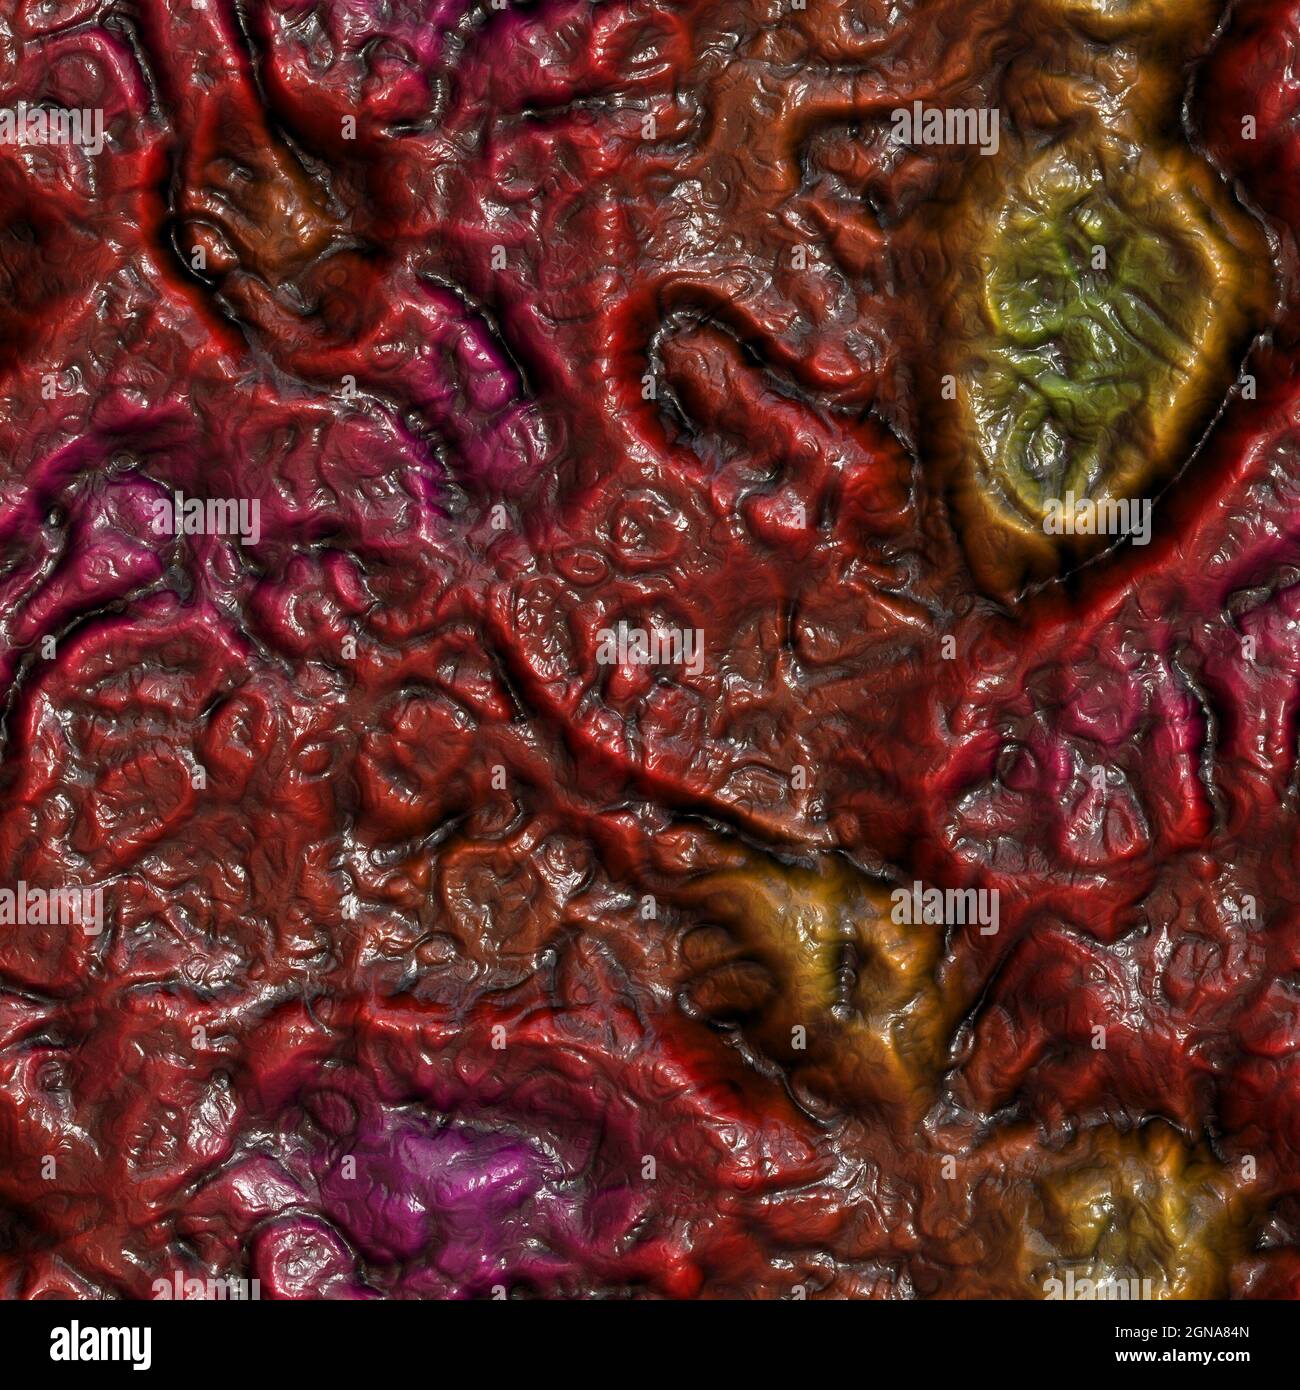 Rotten mouldy bruised innards flesh 3D illustration Stock Photo